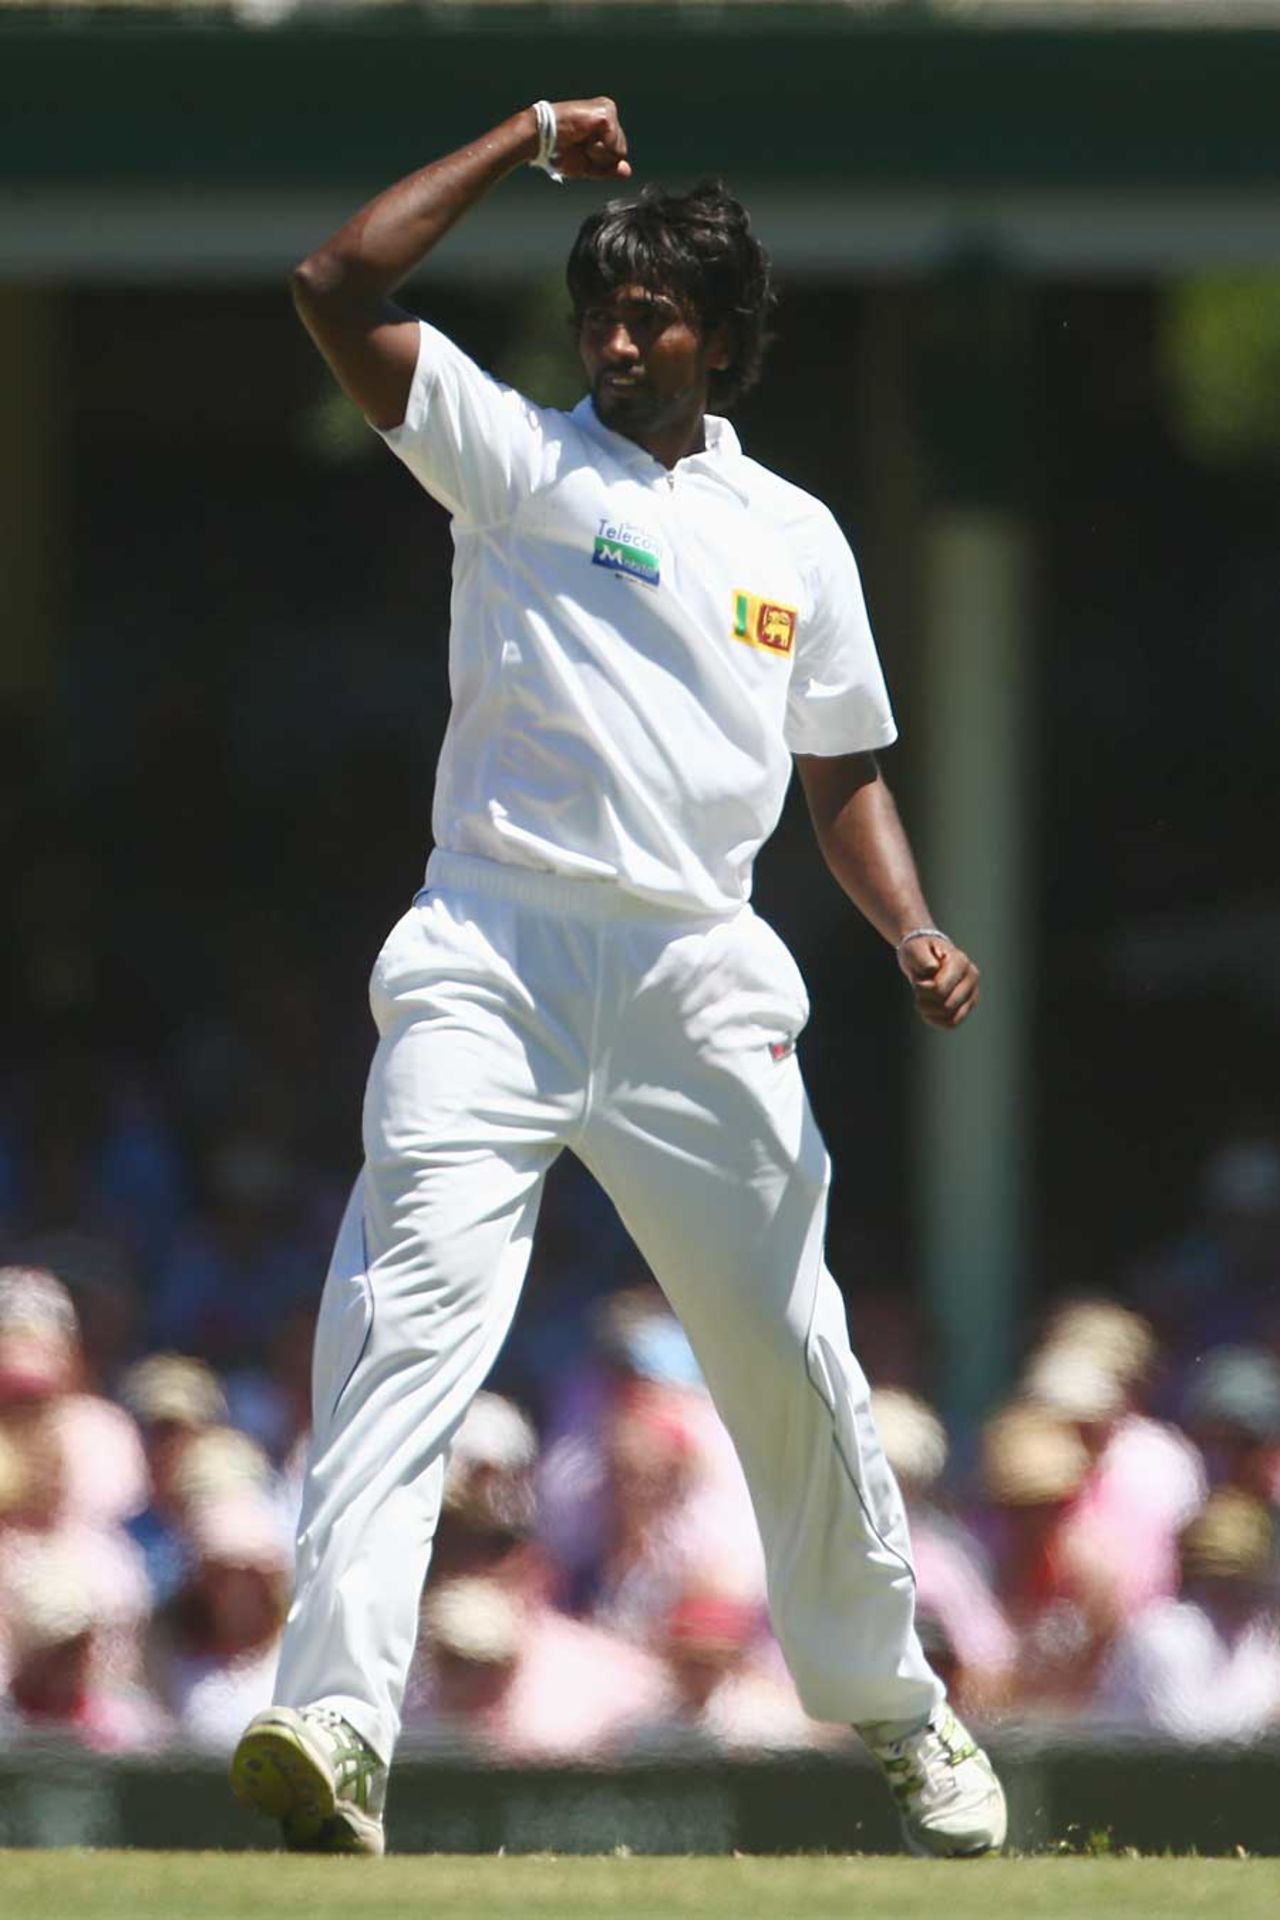 Nuwan Pradeep dismissed Peter Siddle, Australia v Sri Lanka, 3rd Test, Sydney, 3rd day, January 5, 2013